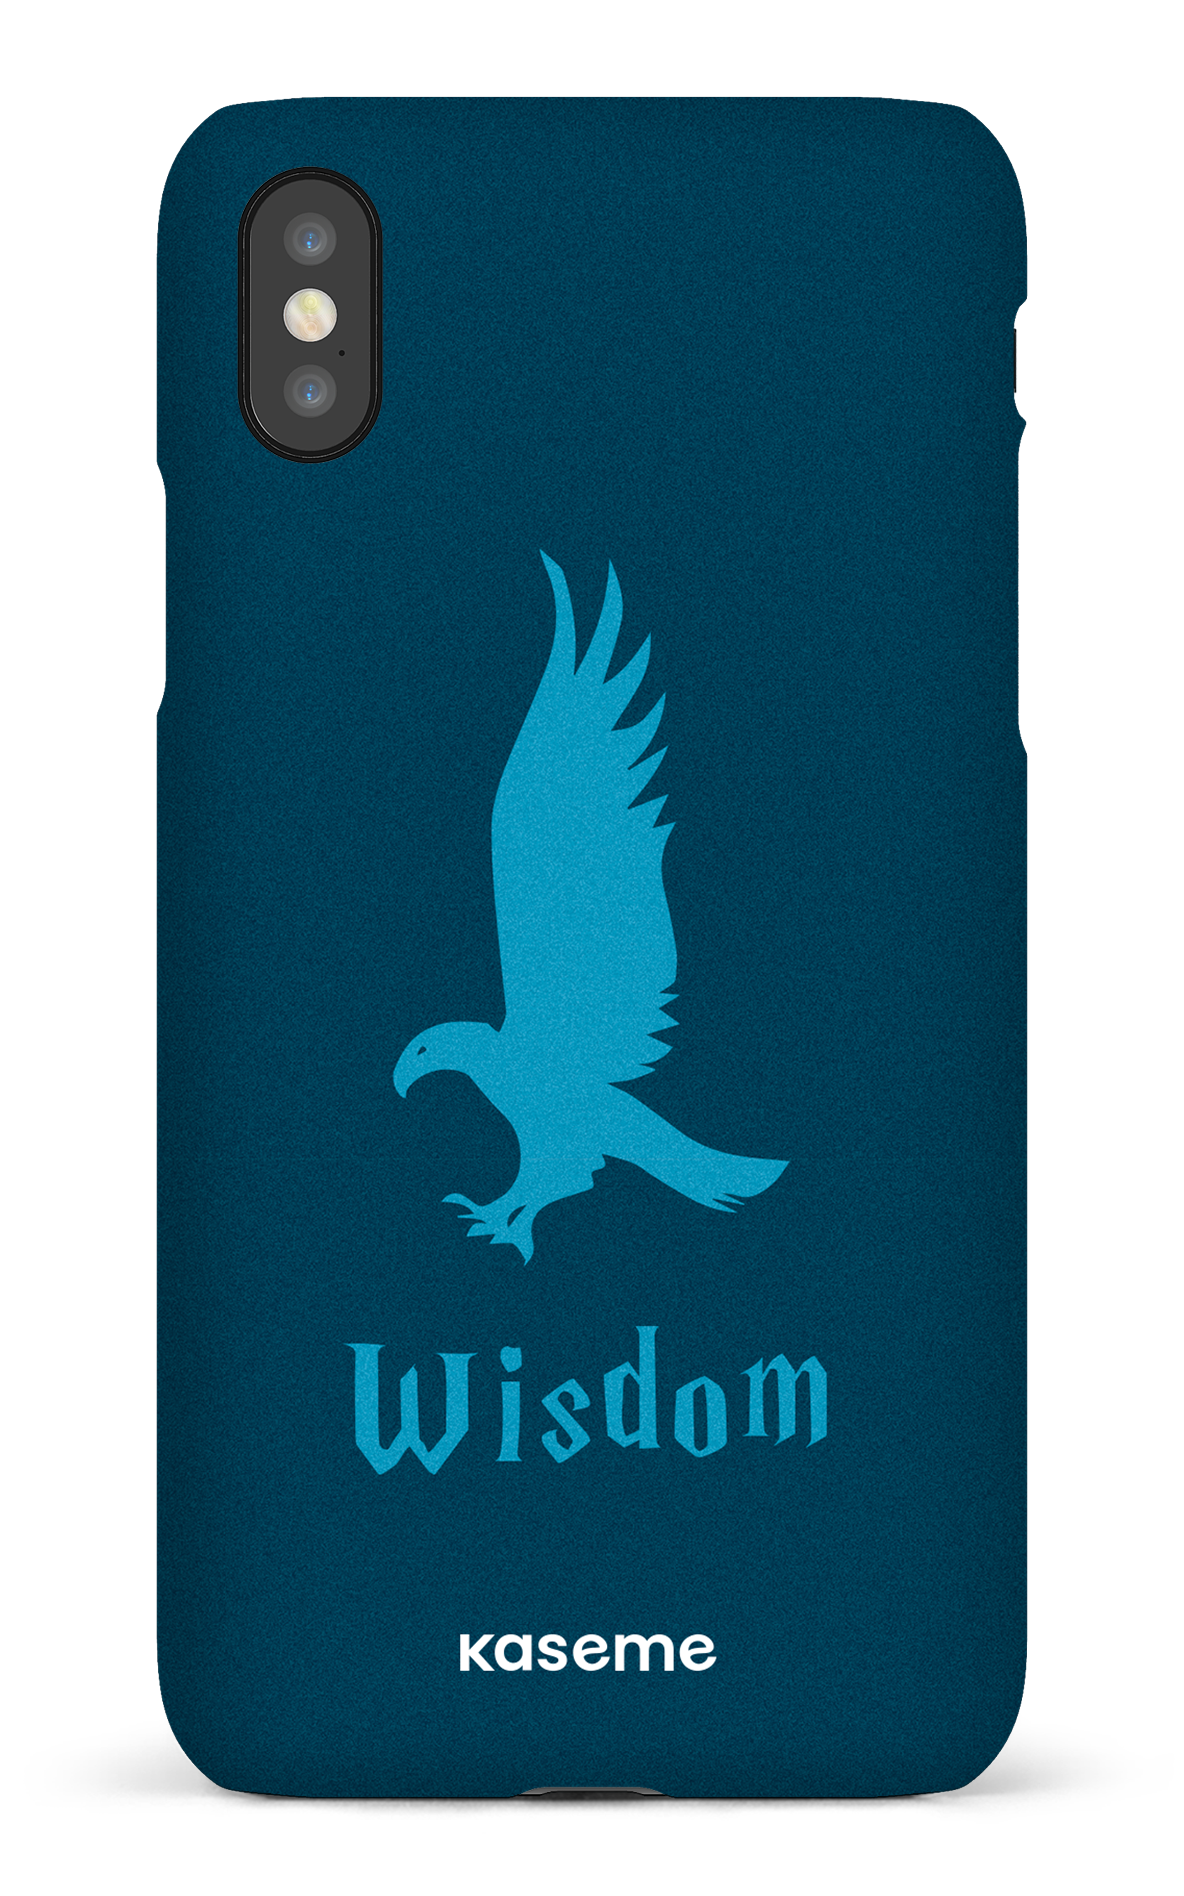 Wisdom - iPhone X/XS